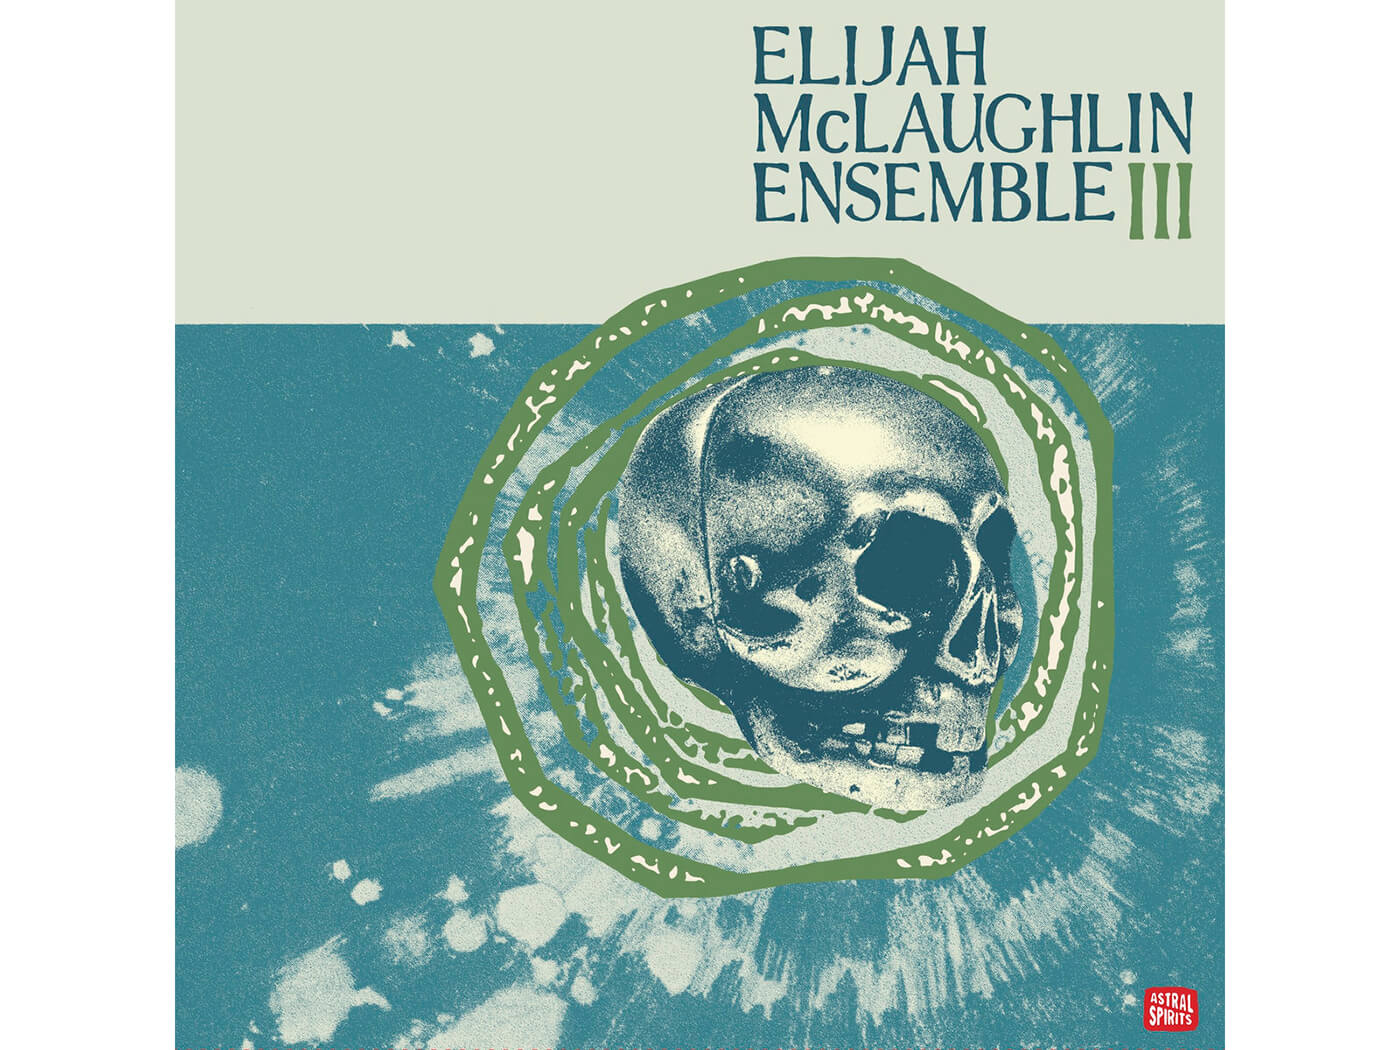 Hear “Headwaters”, the ravishing new track from the Elijah McLaughlin Ensemble